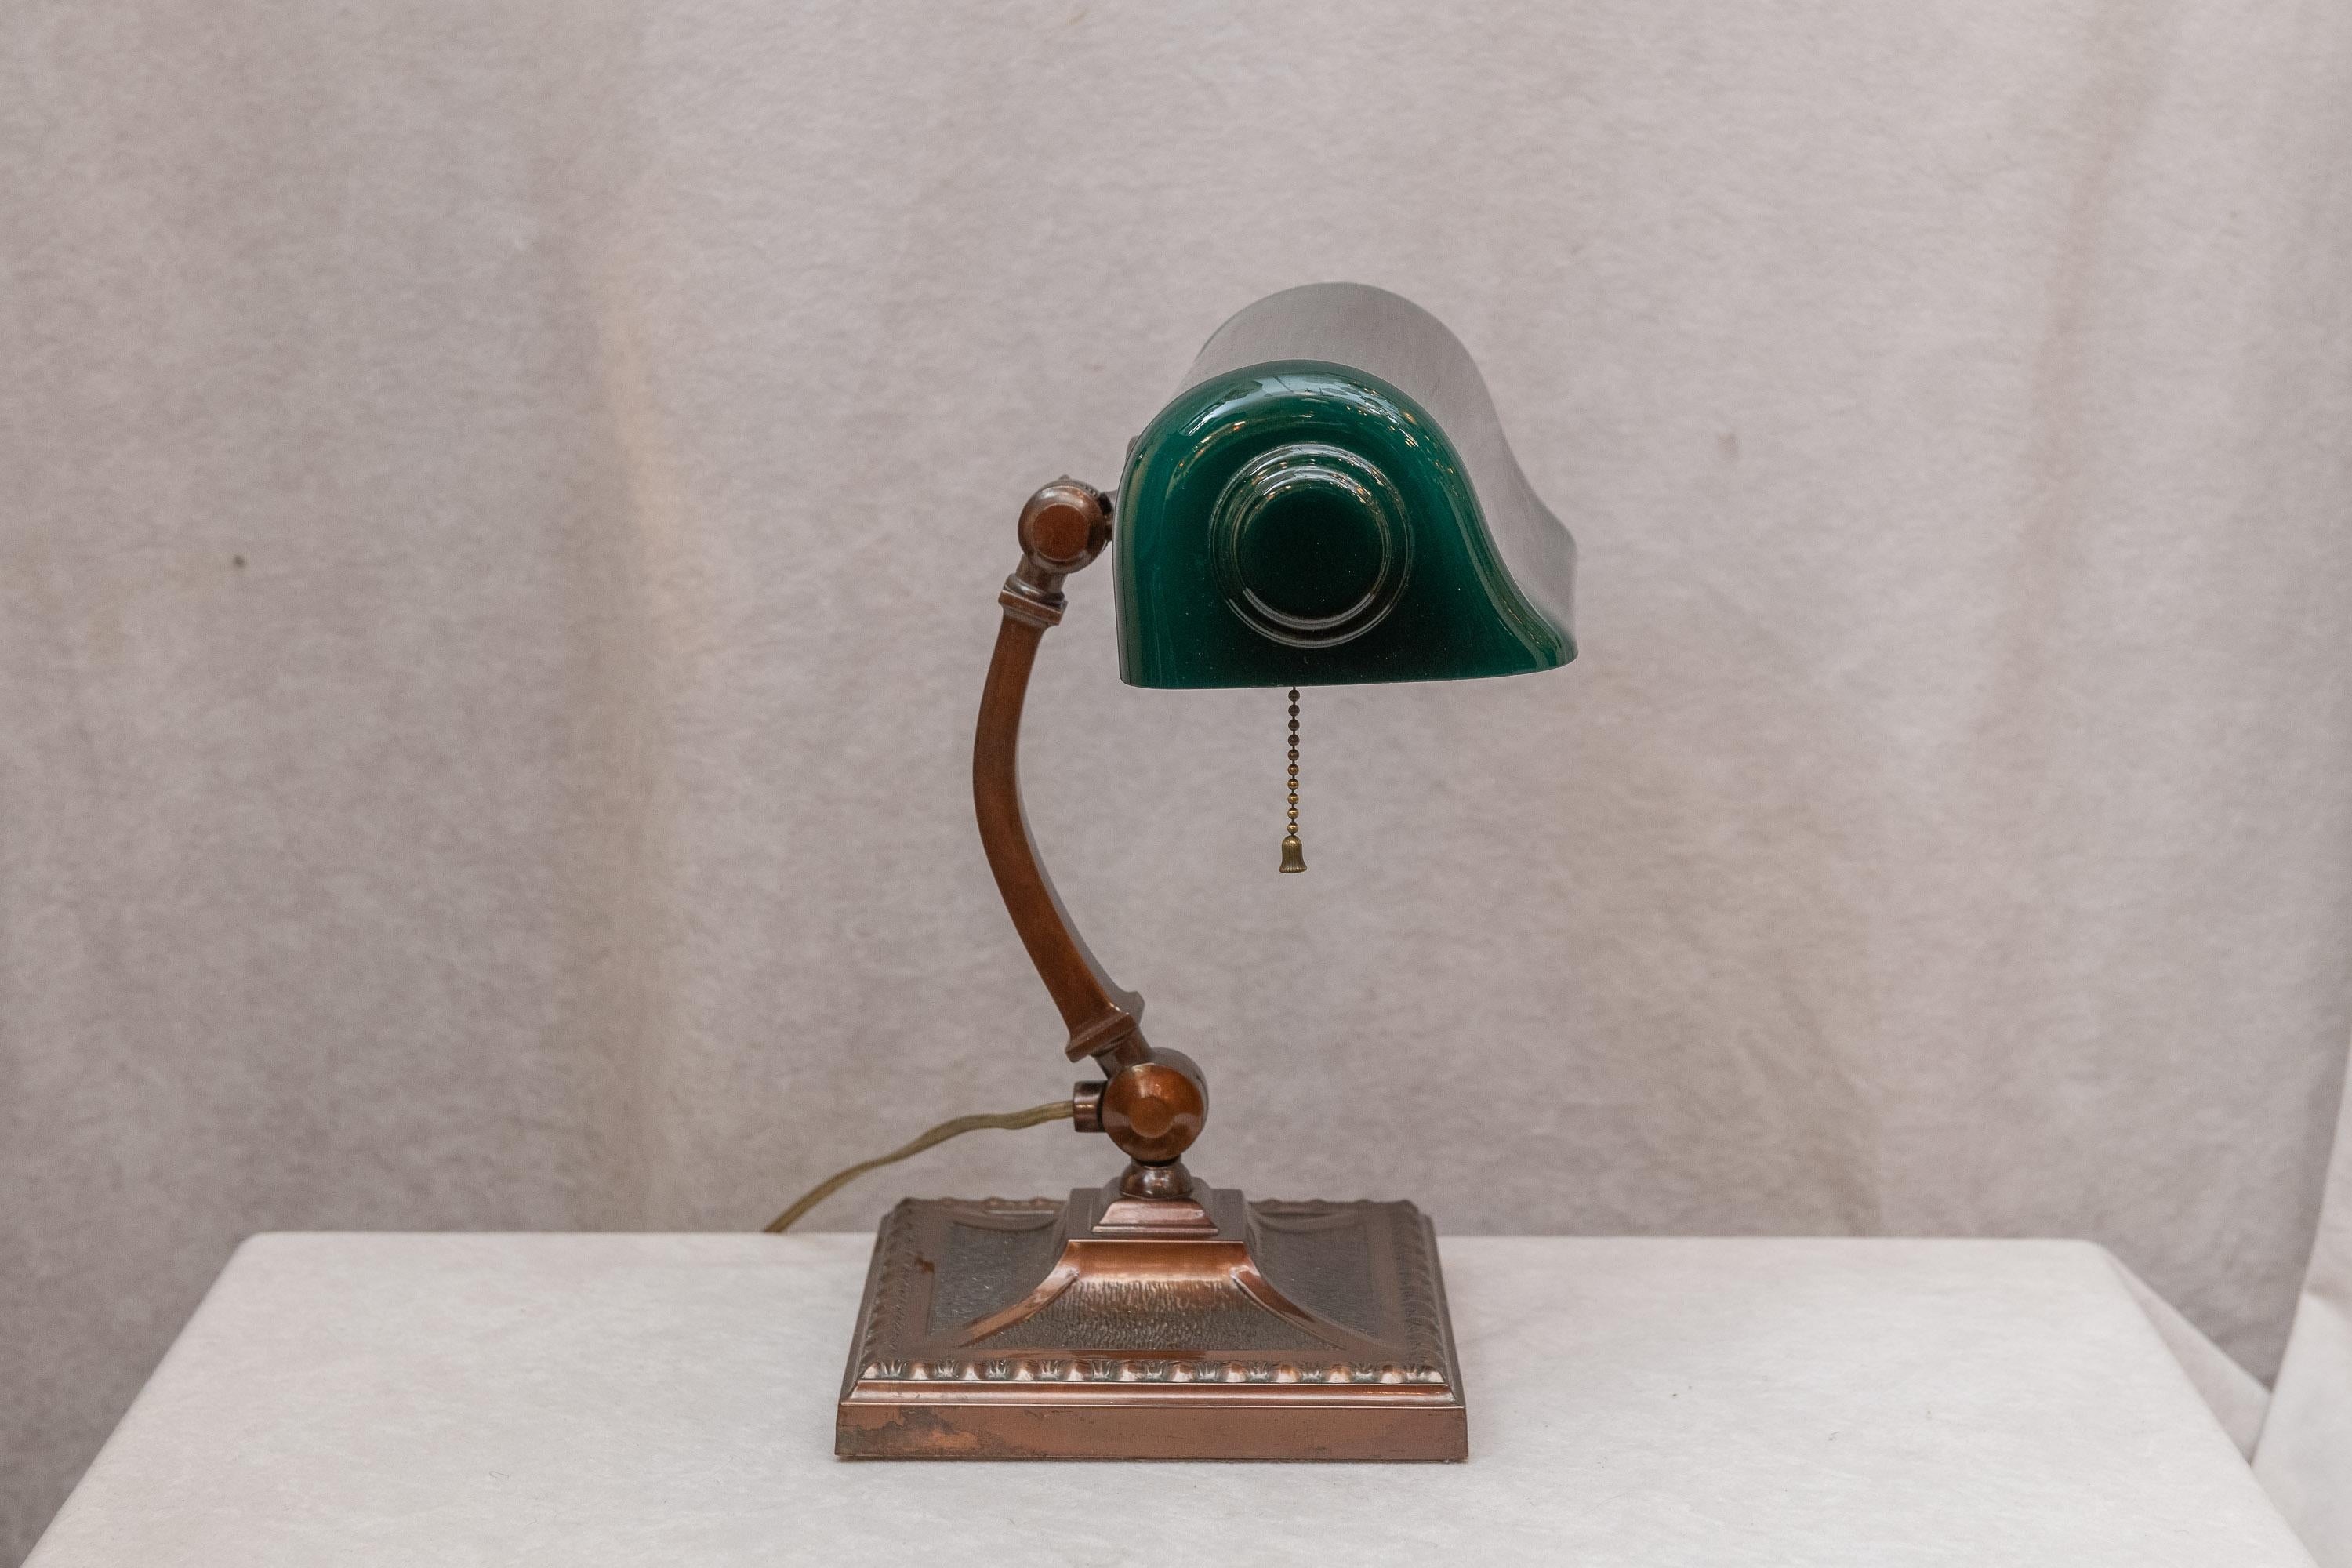 American Antique Green Shade Banker's Lamp, Signed Verdelite